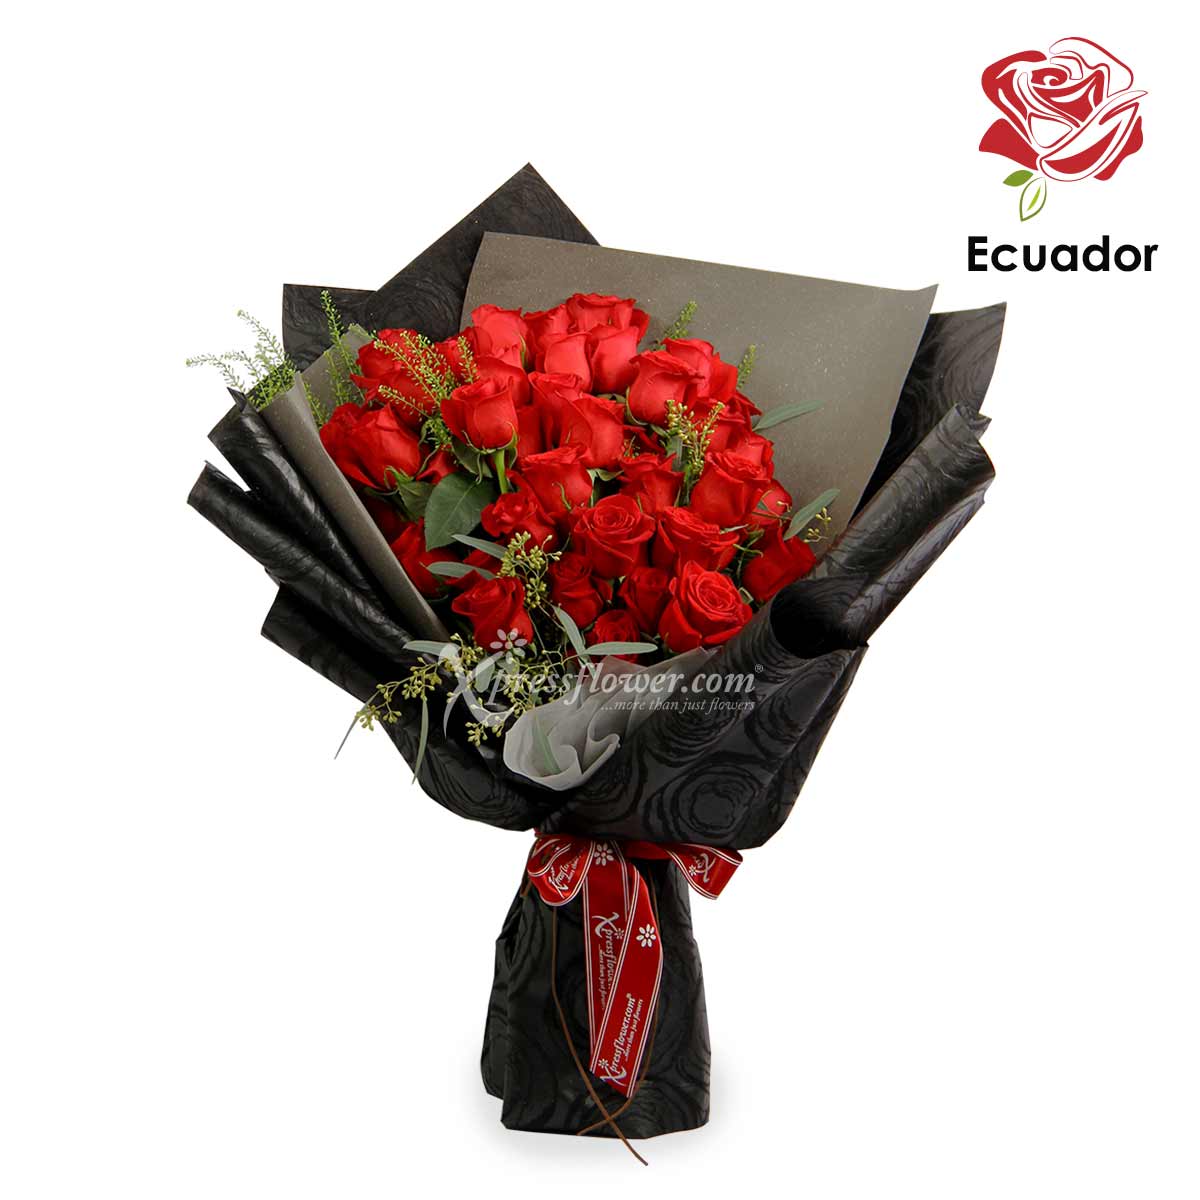 Black Opal (50 Premium Ecuador Red Roses)